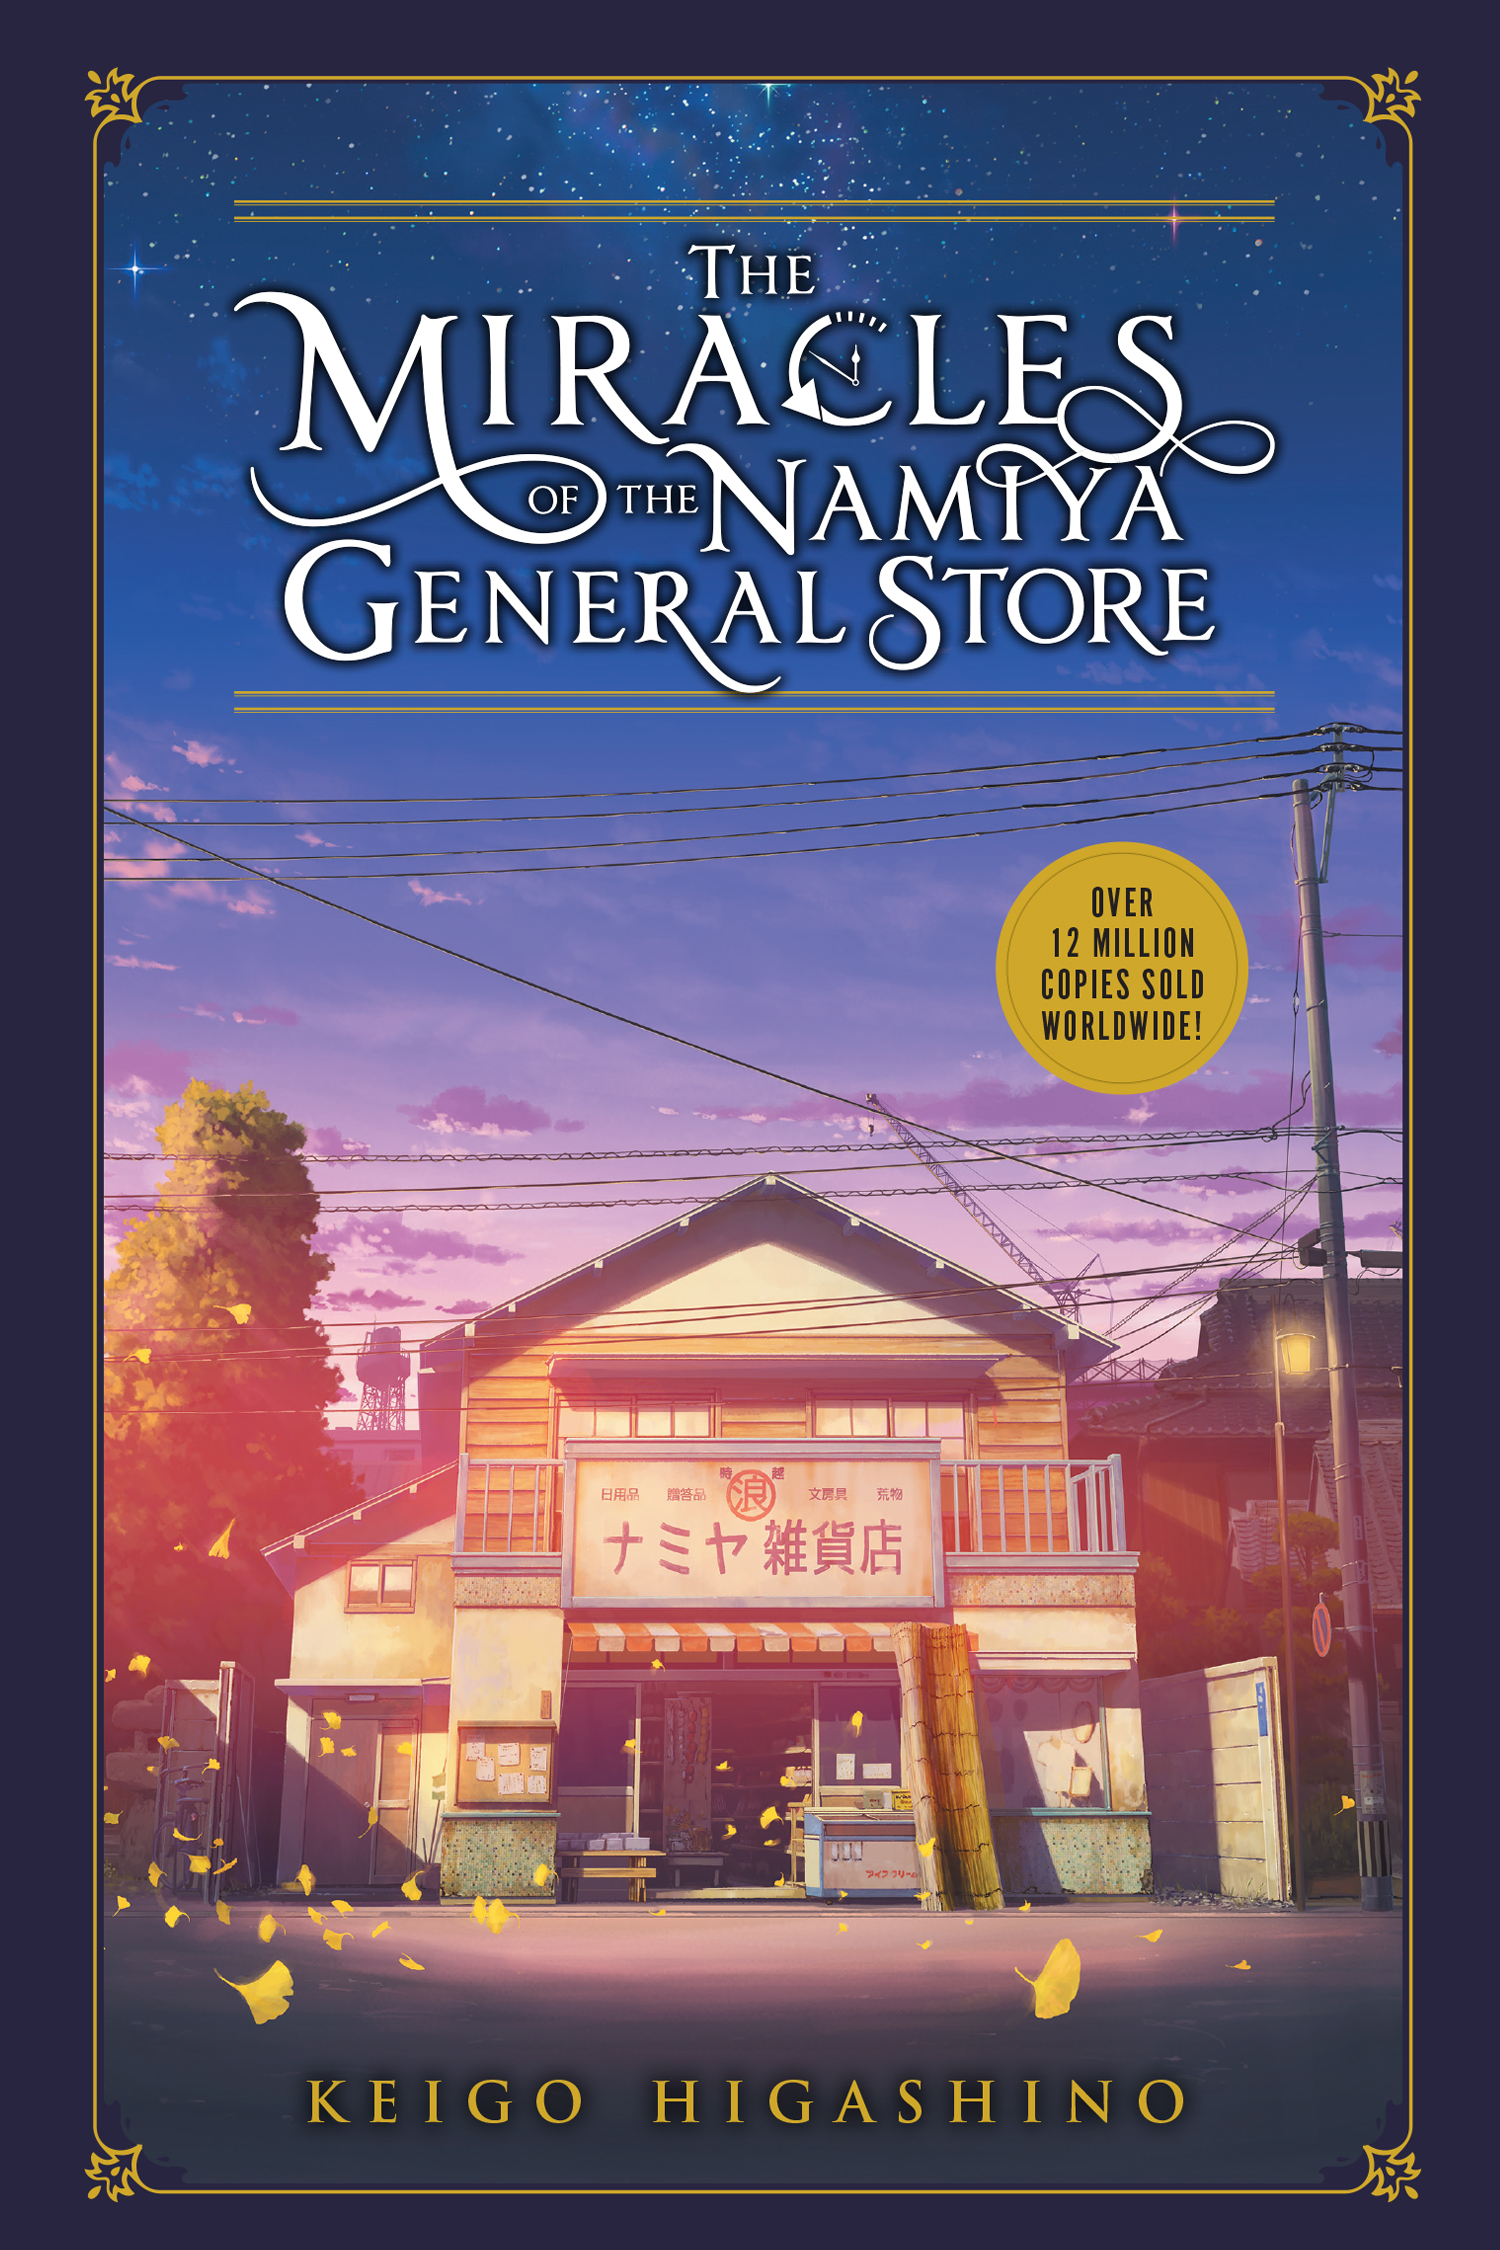 The Miracles of The Namiya General Store by Keigo Higashino giveaway